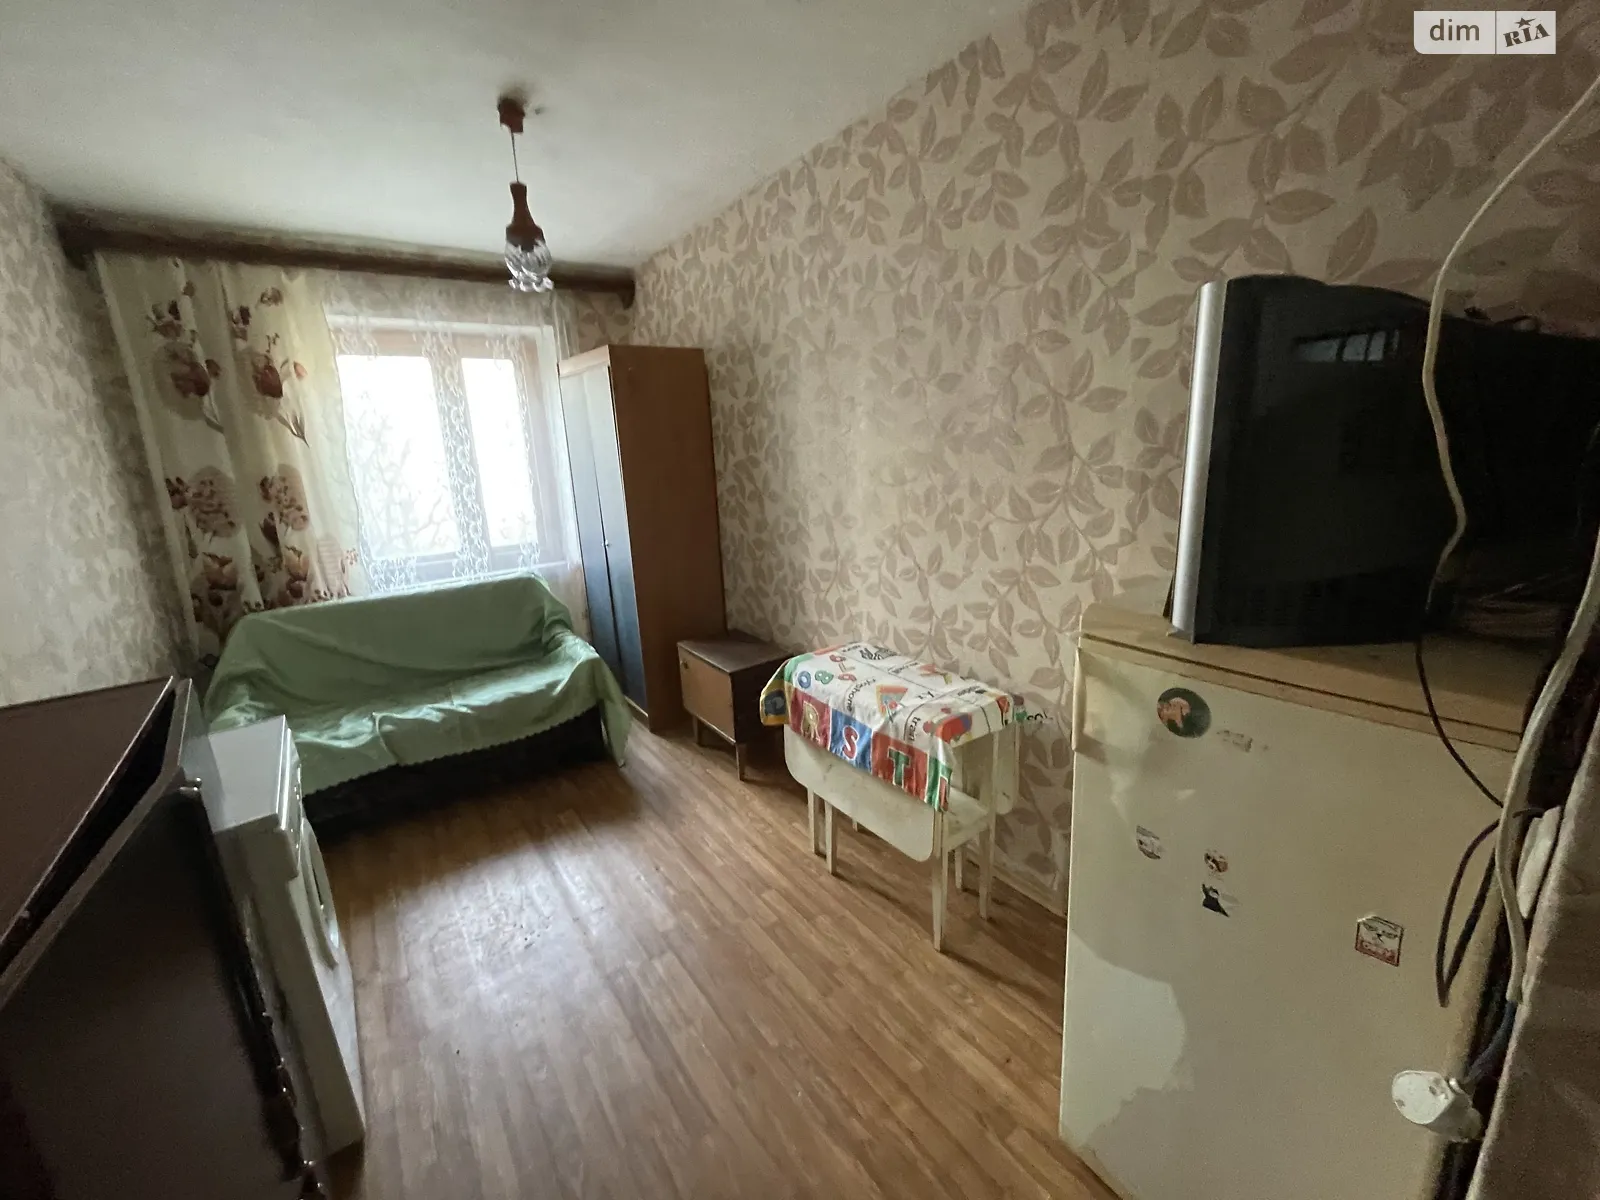 Продается комната 13 кв. м в Черноморске, цена: 6500 $ - фото 1